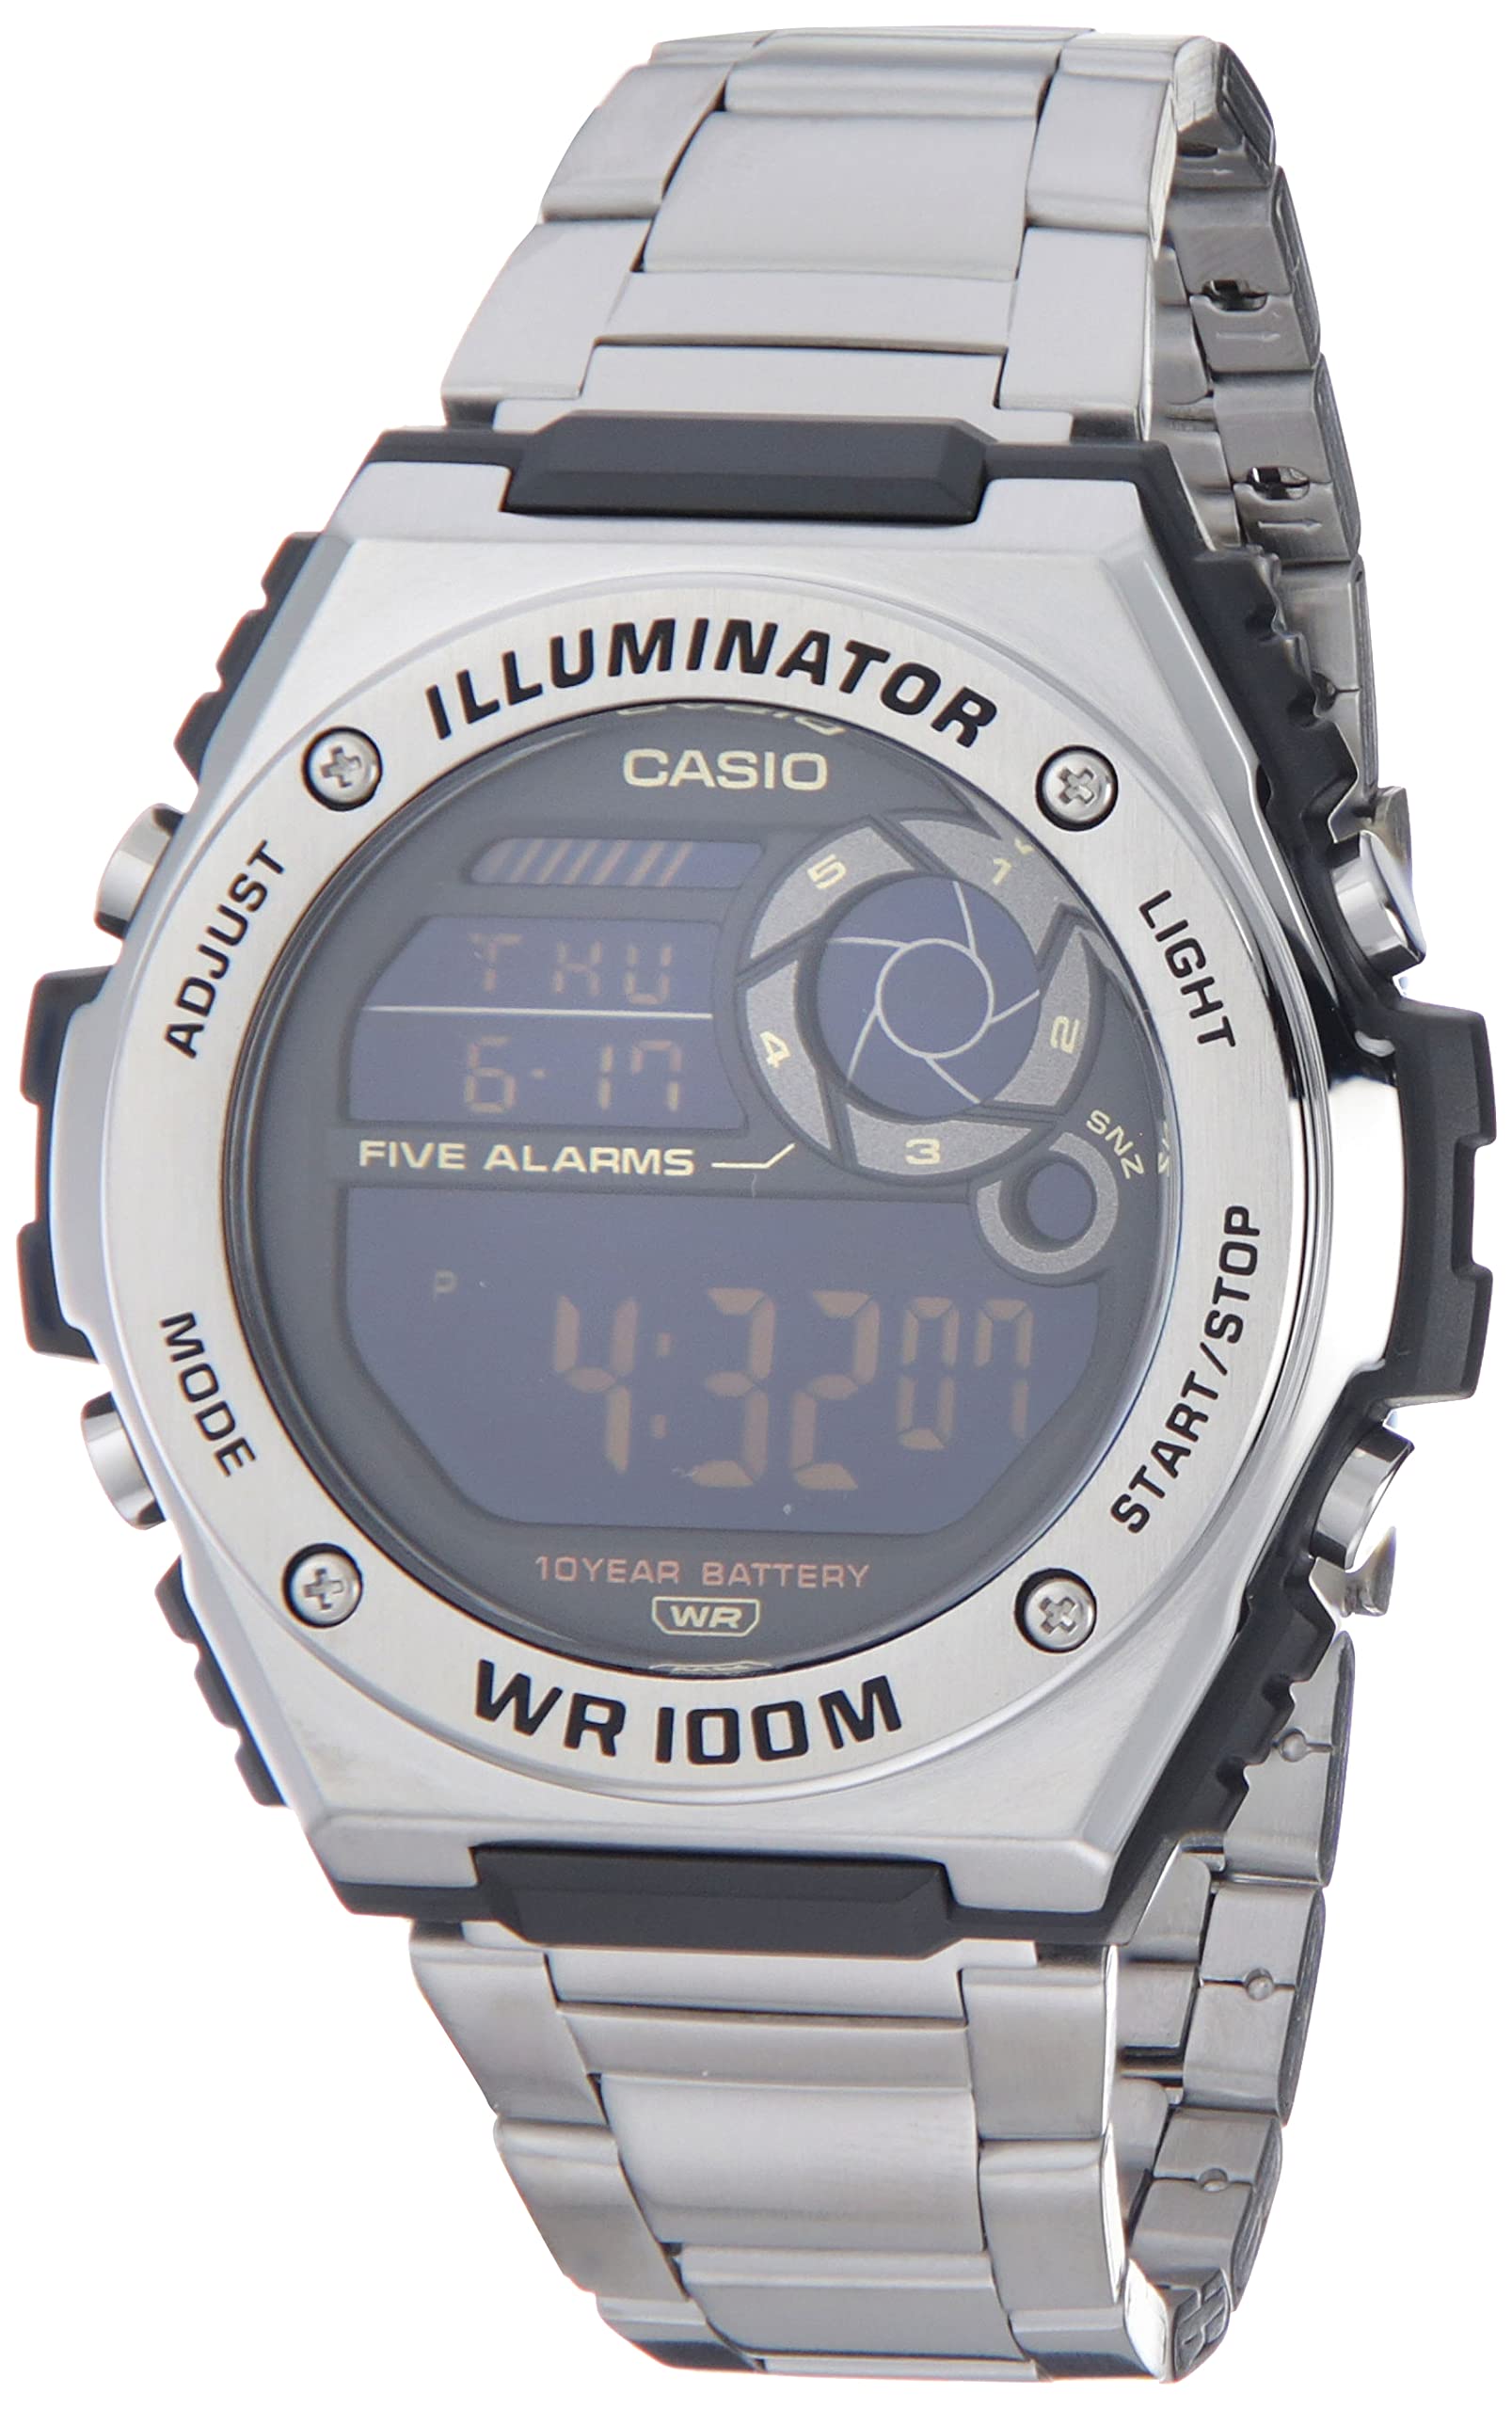 Casio LED Illuminator Men's Quartz Digital Watch Day/Date Indicator 100M Water Resistant 5 AlarmMWD-100HD-1BV